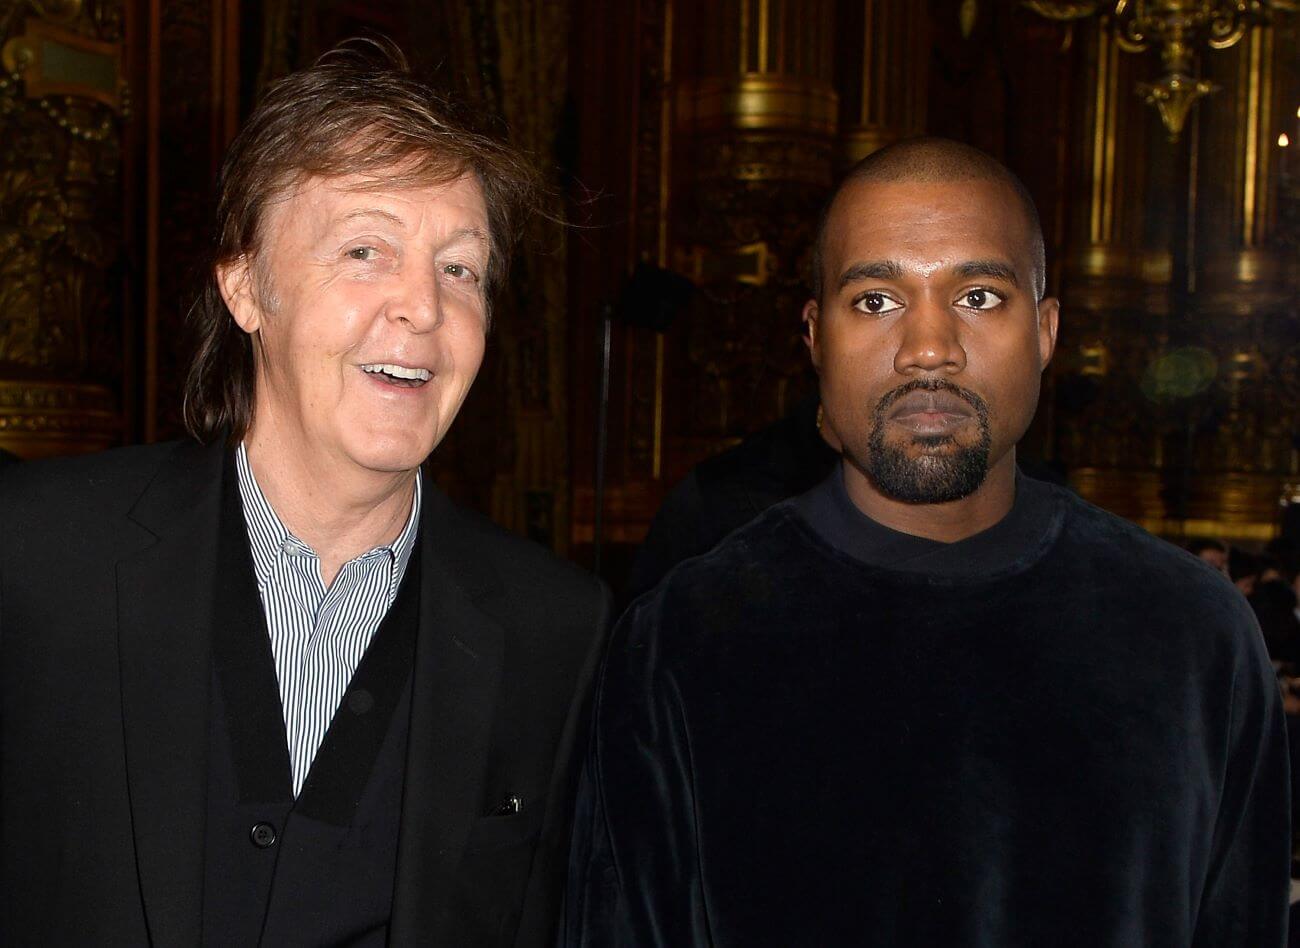 Paul McCartney and Kanye West wear black jackets.